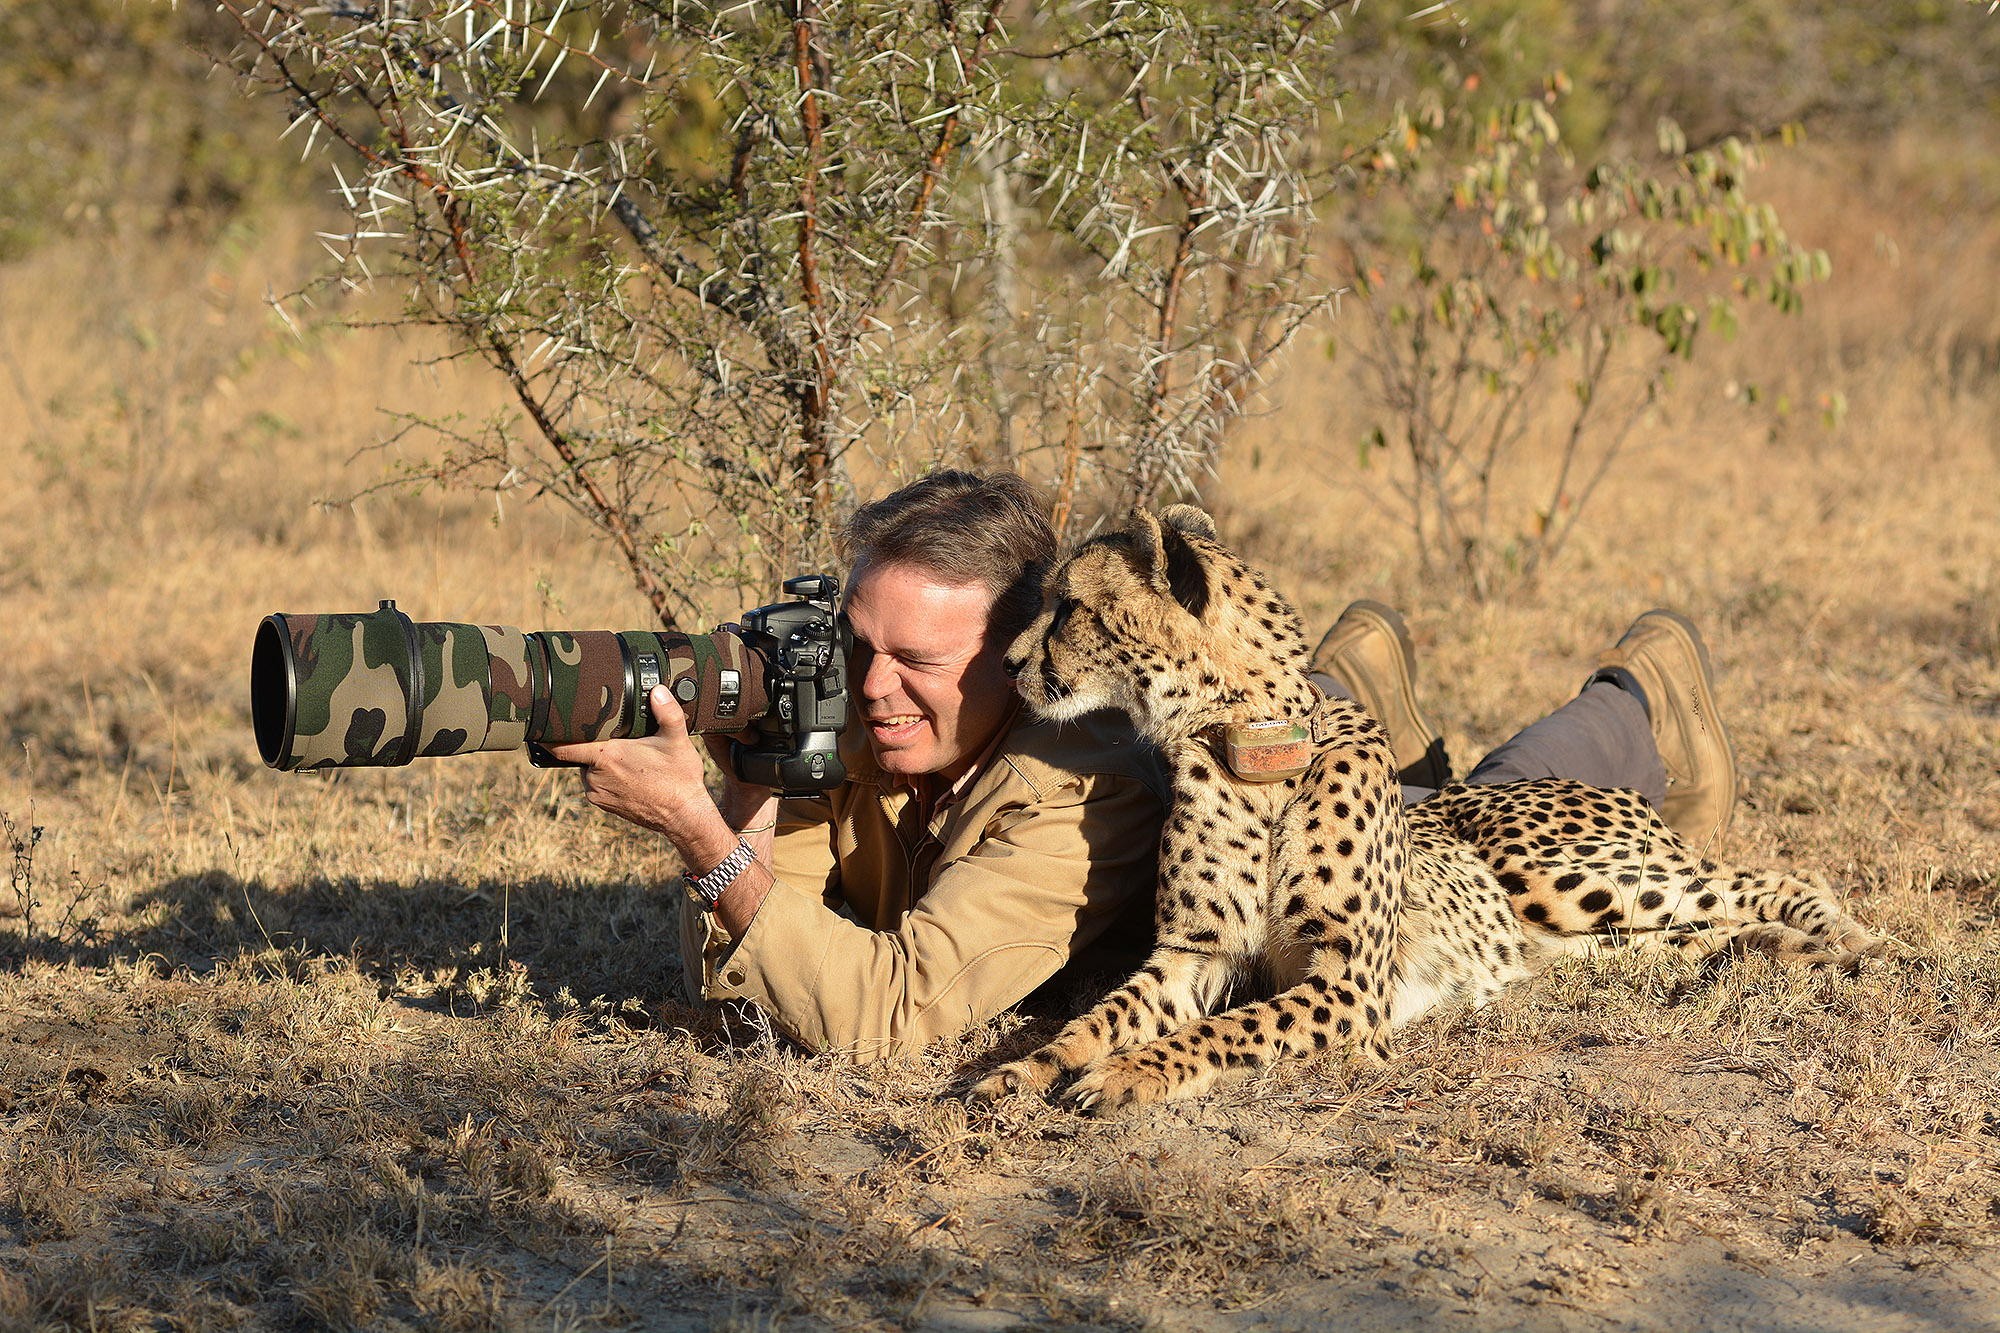 General 2000x1333 cheetahs nature animals photographer camera camouflage savannah mammals men outdoors men big cats lens zoom lens